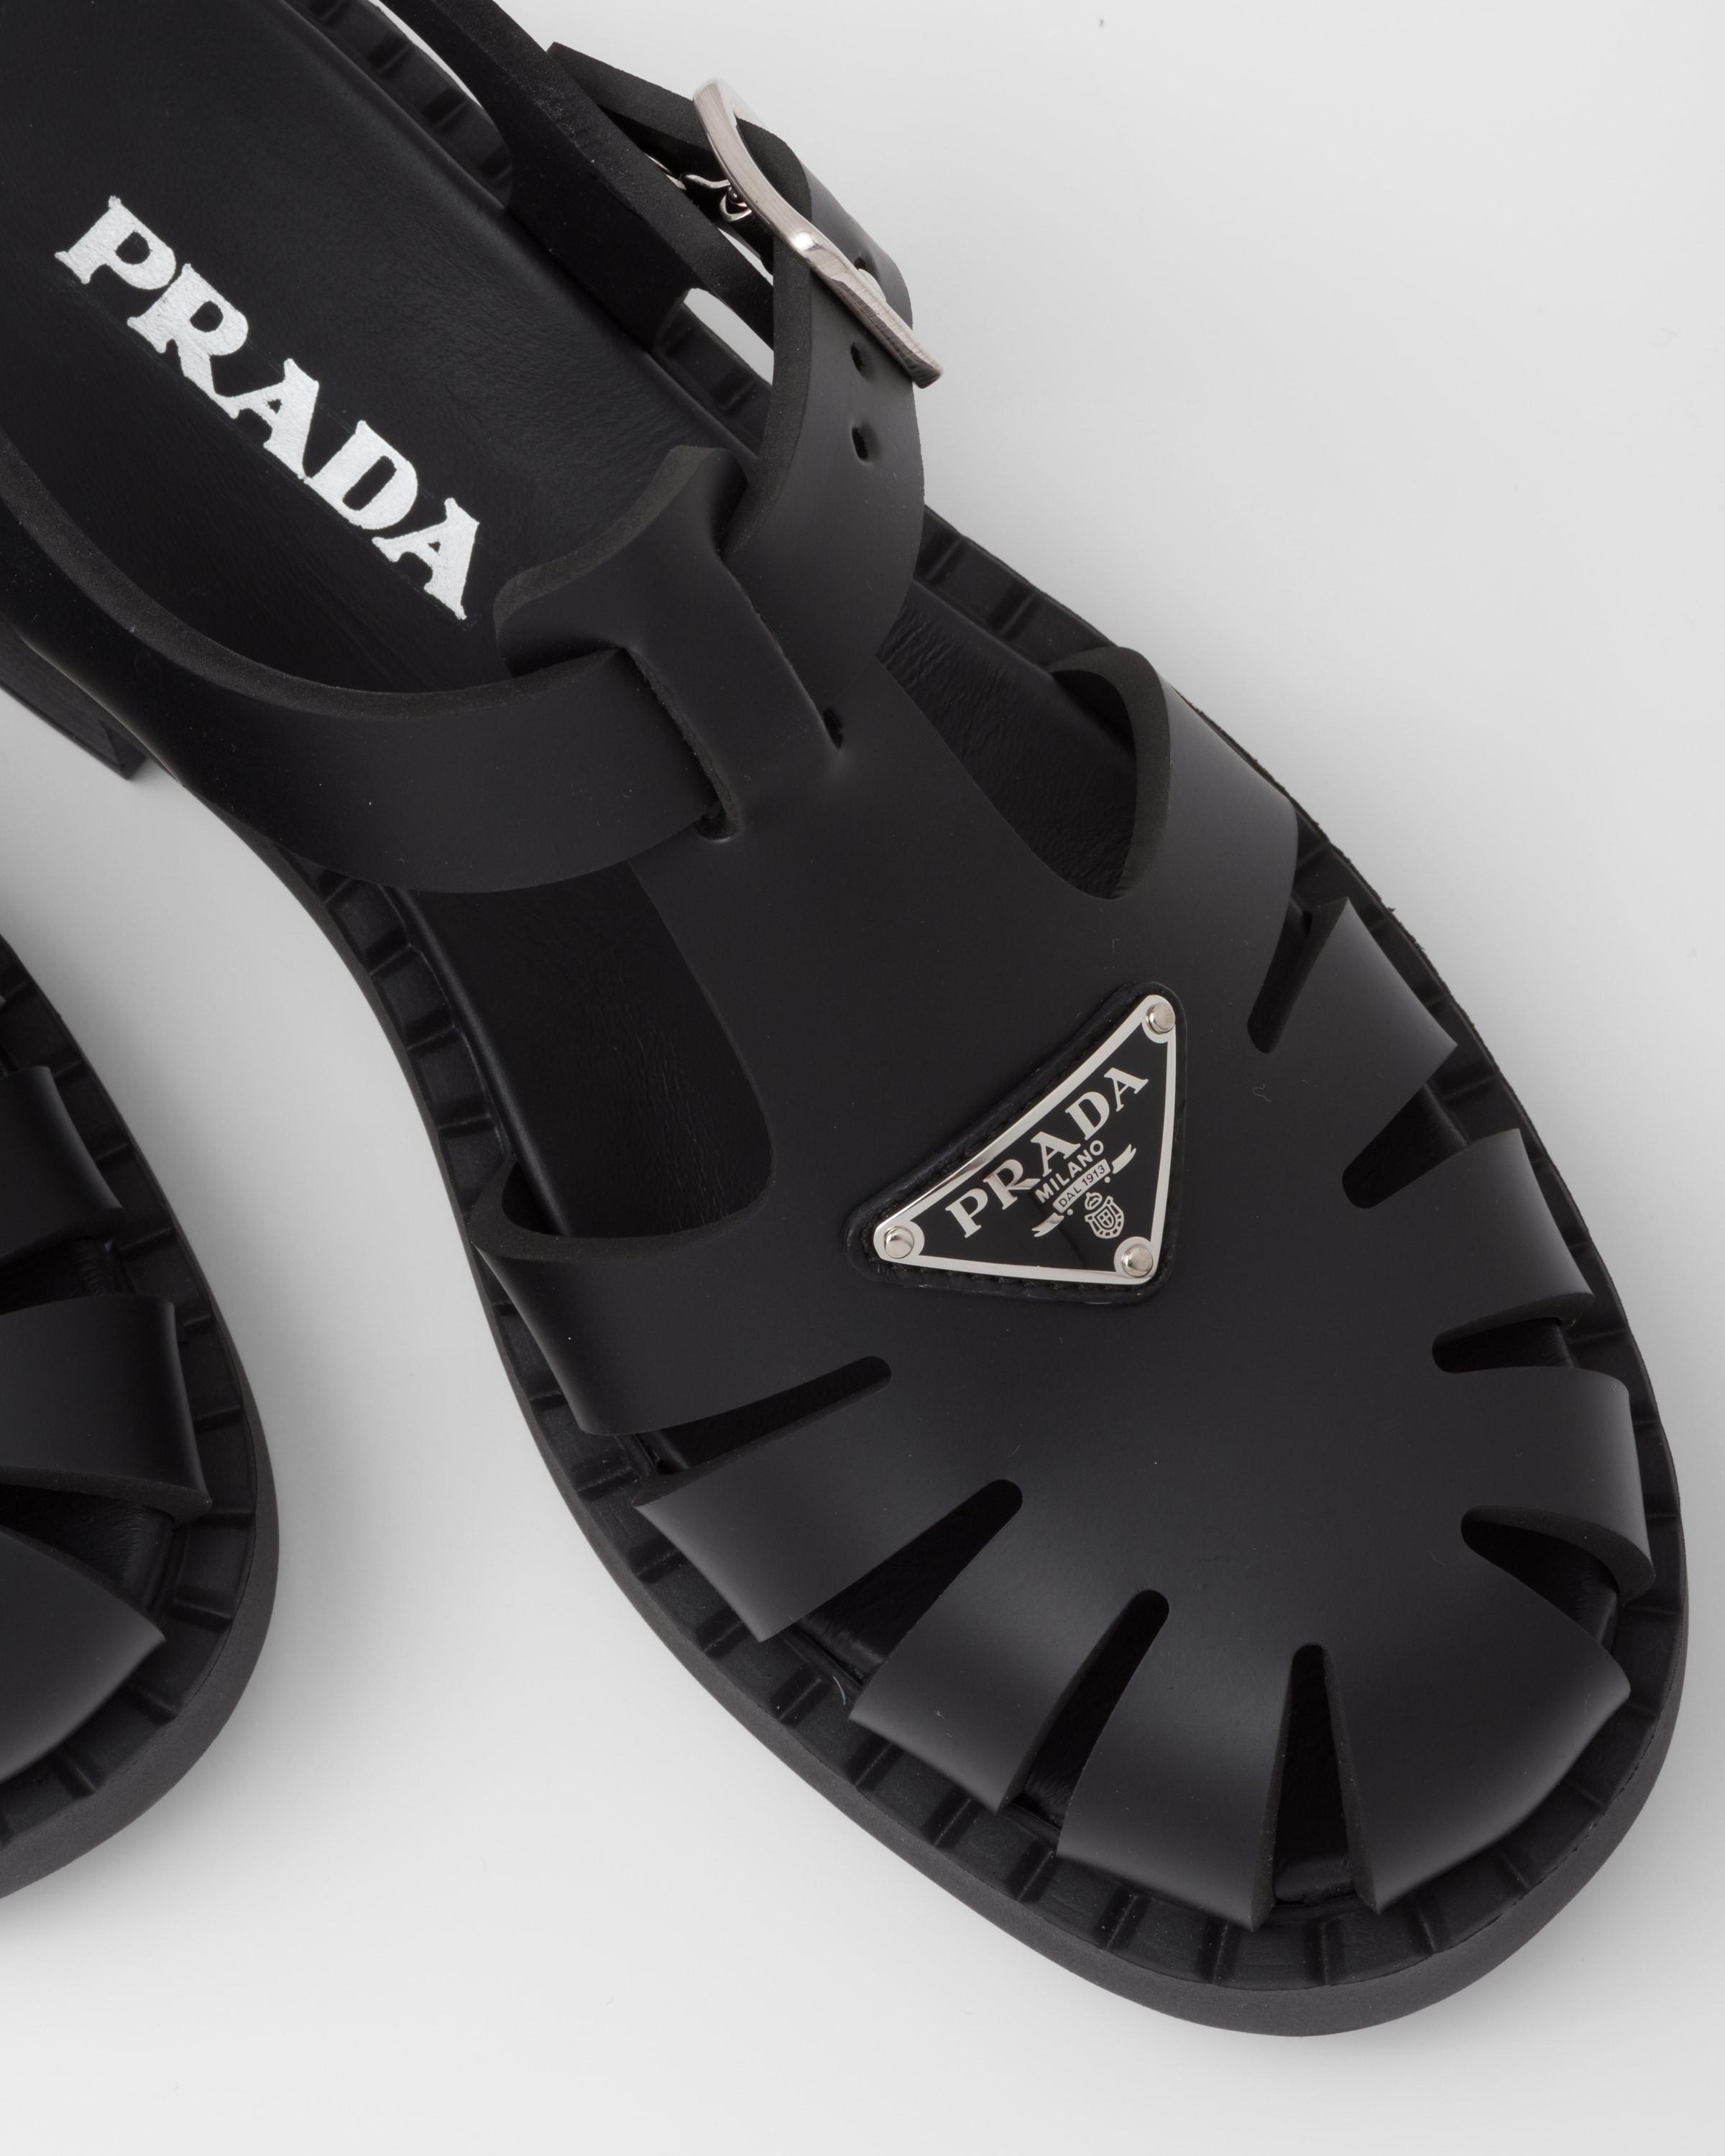 Prada Sporty Foam Rubber Sandals in Black - Lyst